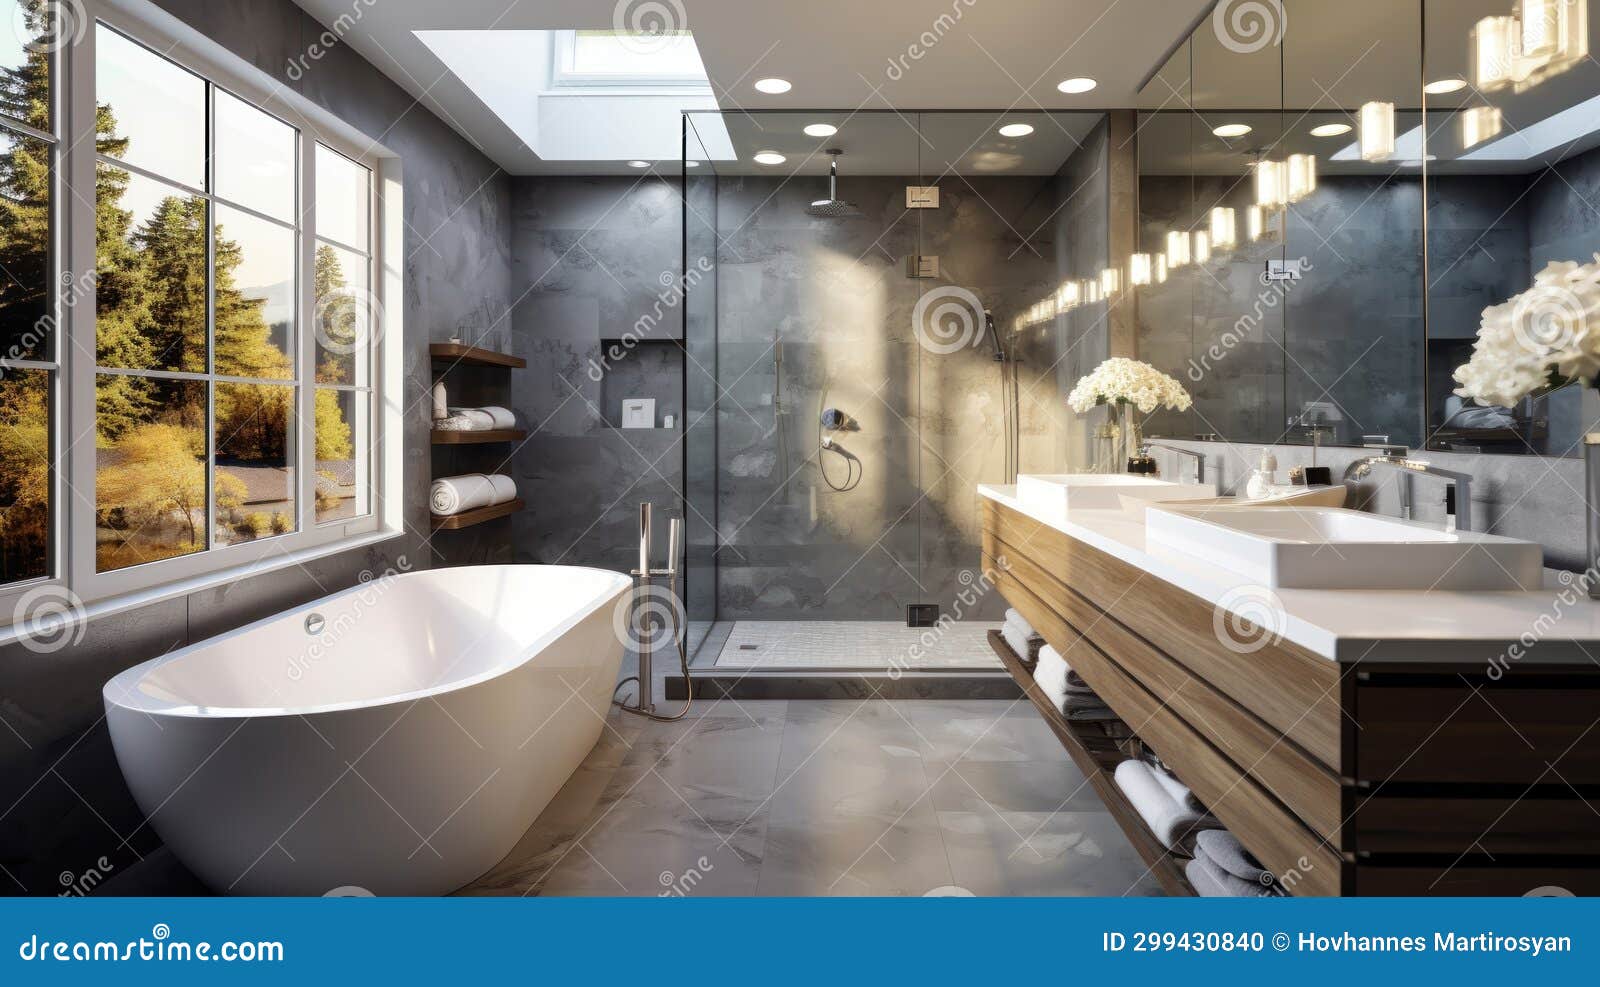 Interior of Modern Bathroom. Luxury Bathroom Stock Illustration ...